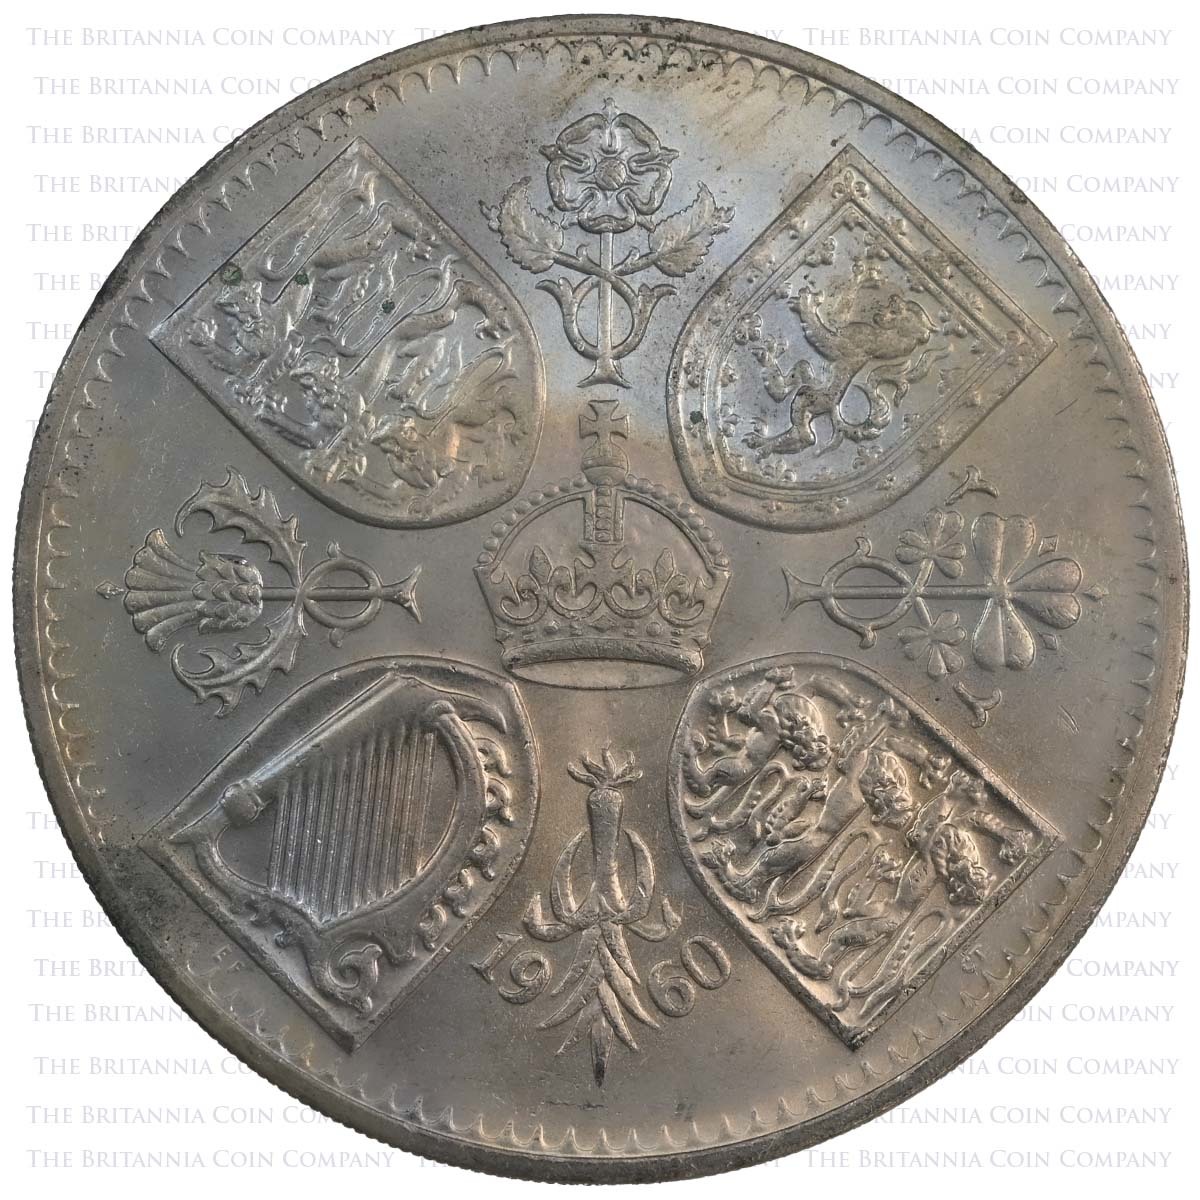 2004 Elizabeth II Gillick Portrait 13 Coin Set 1960 Crown Reverse